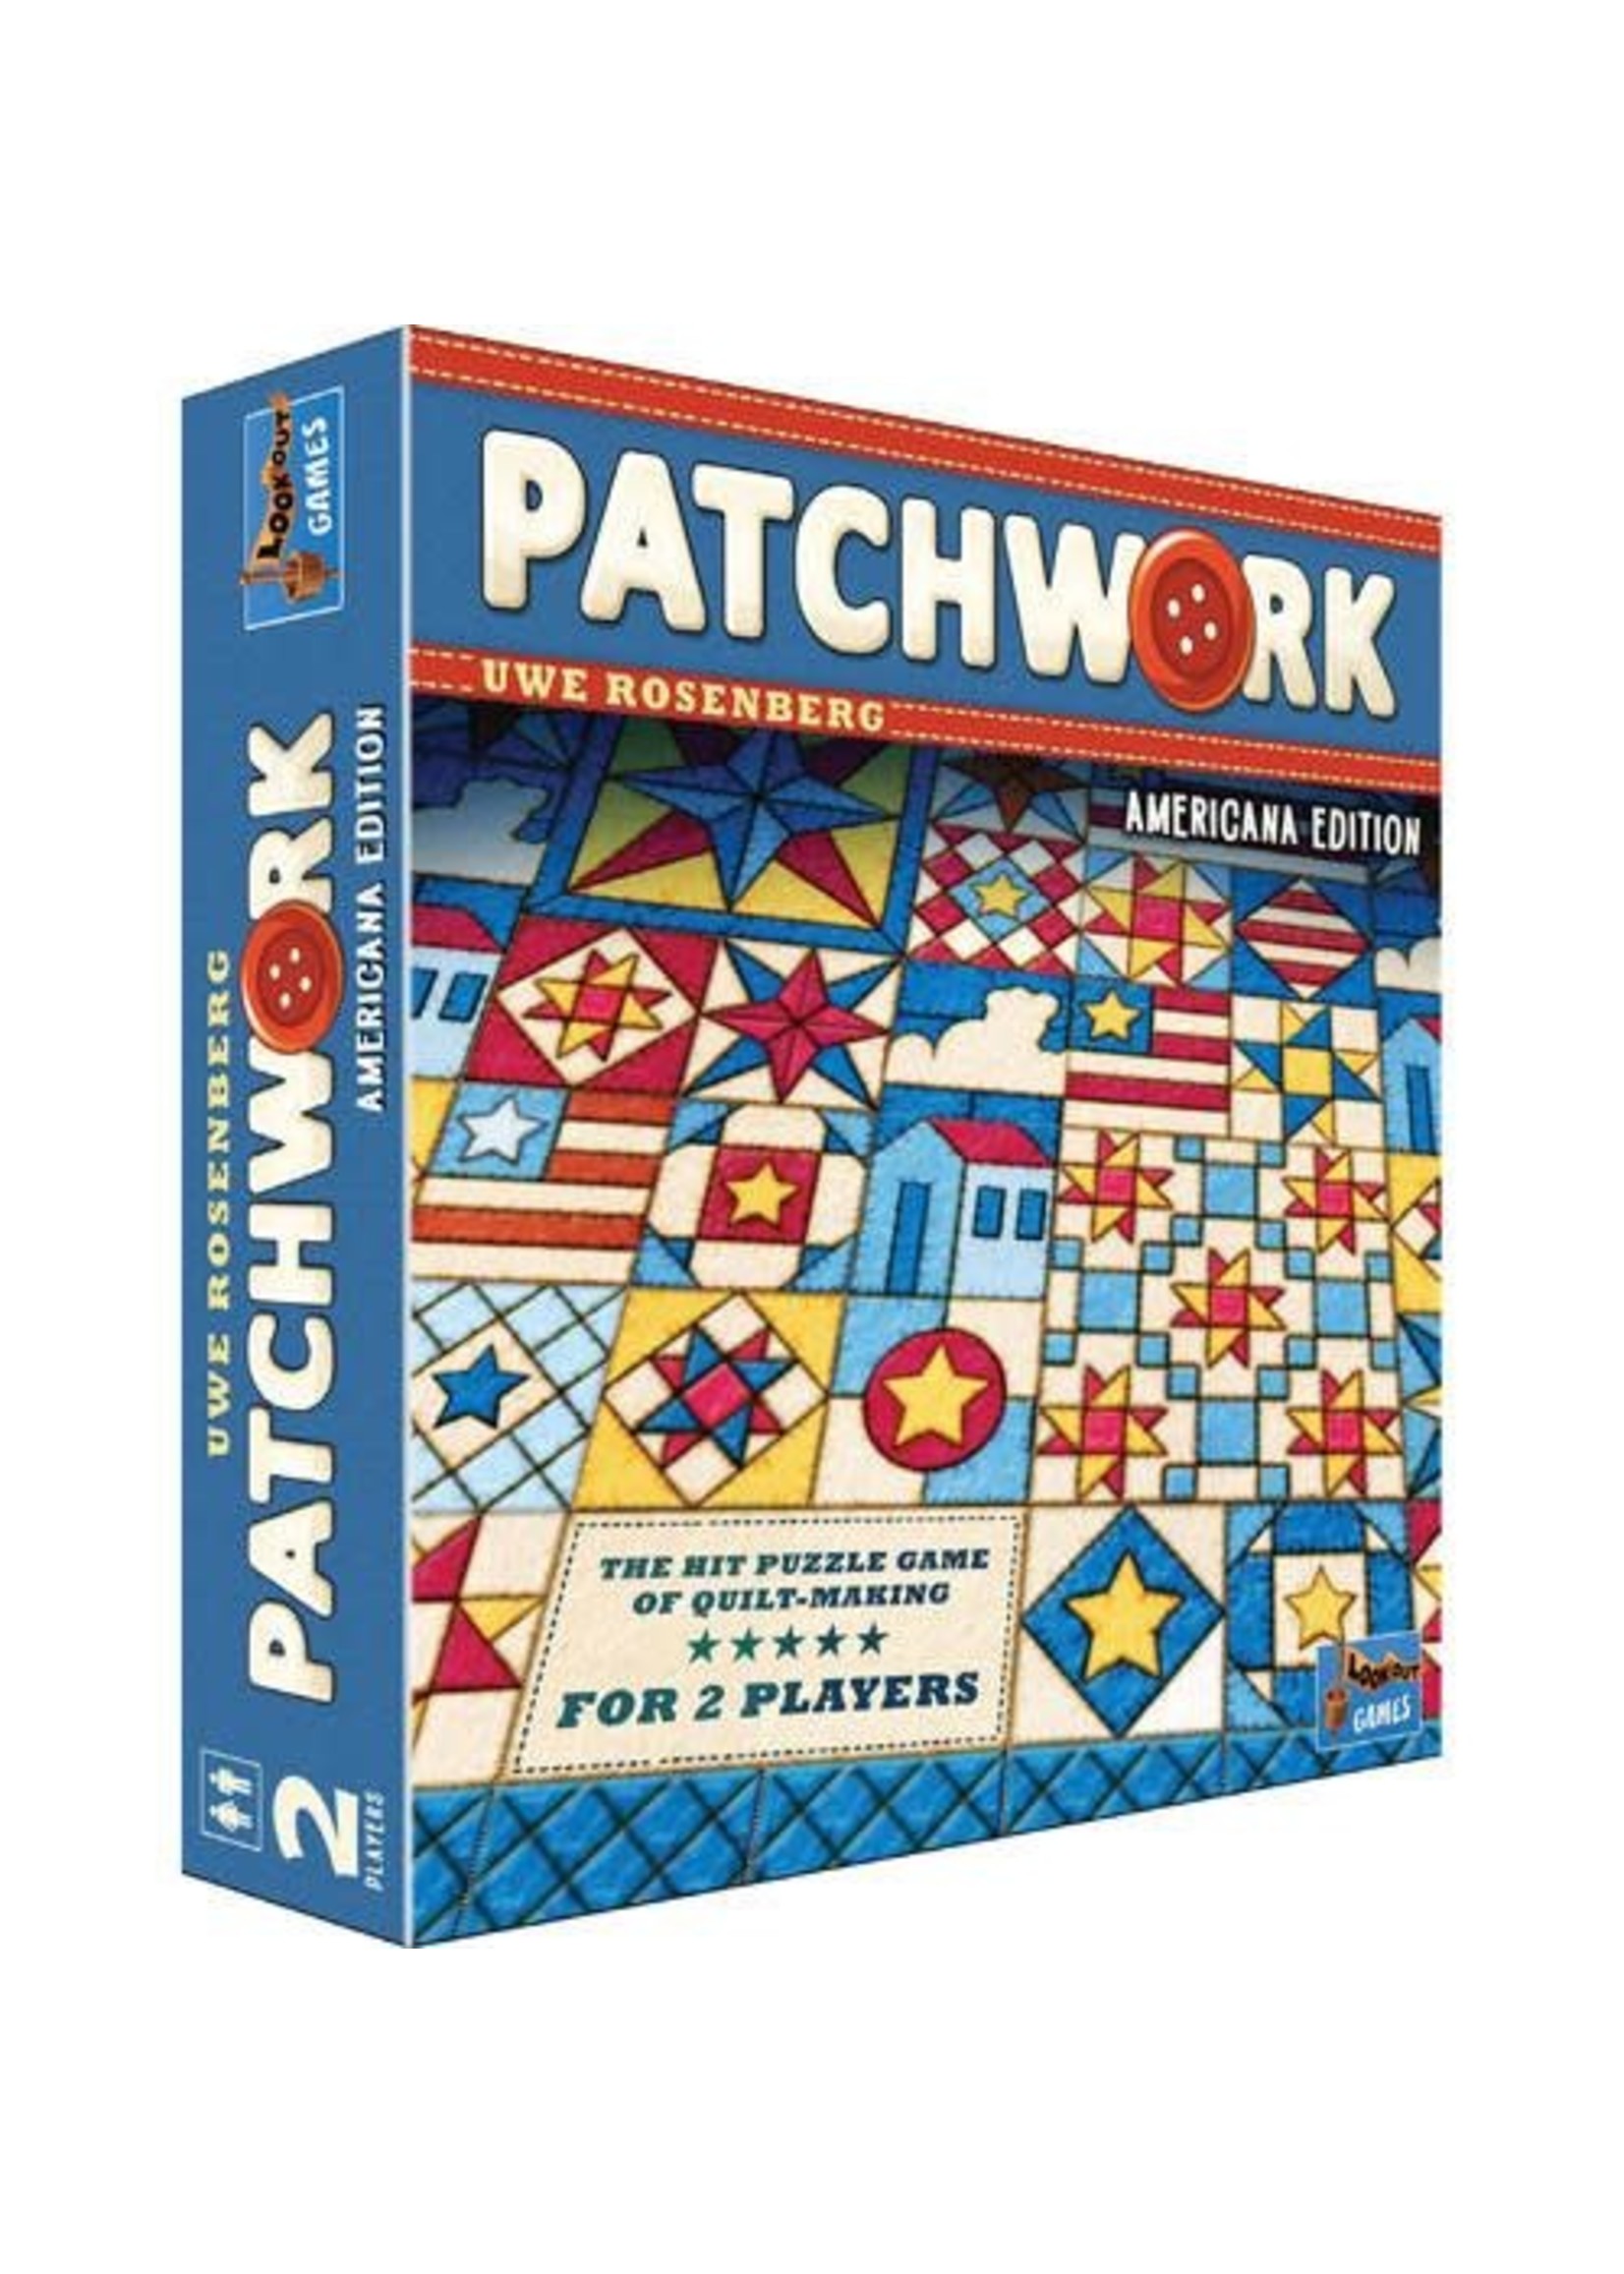 RENTAL - Patchwork Americana Edition 15.1 oz